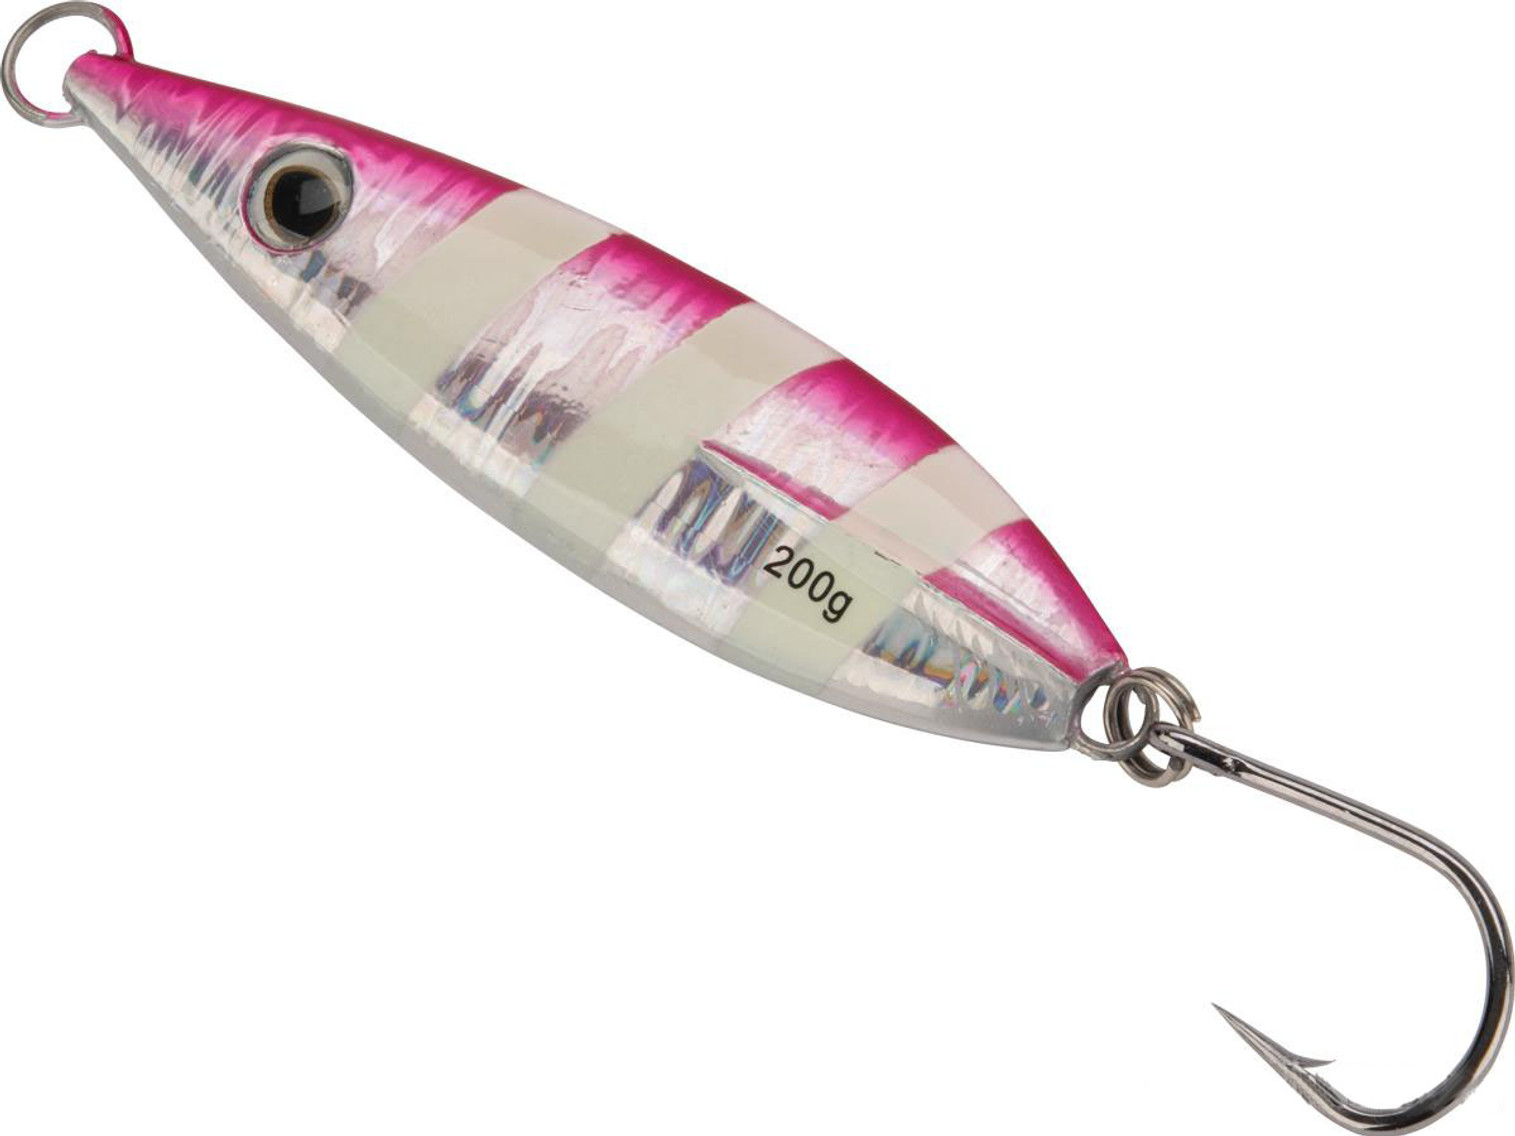 Battle Angler "Phantom-Fall II" Jigging Lure Fishing Jig (Model: 200g Pink Stripe)